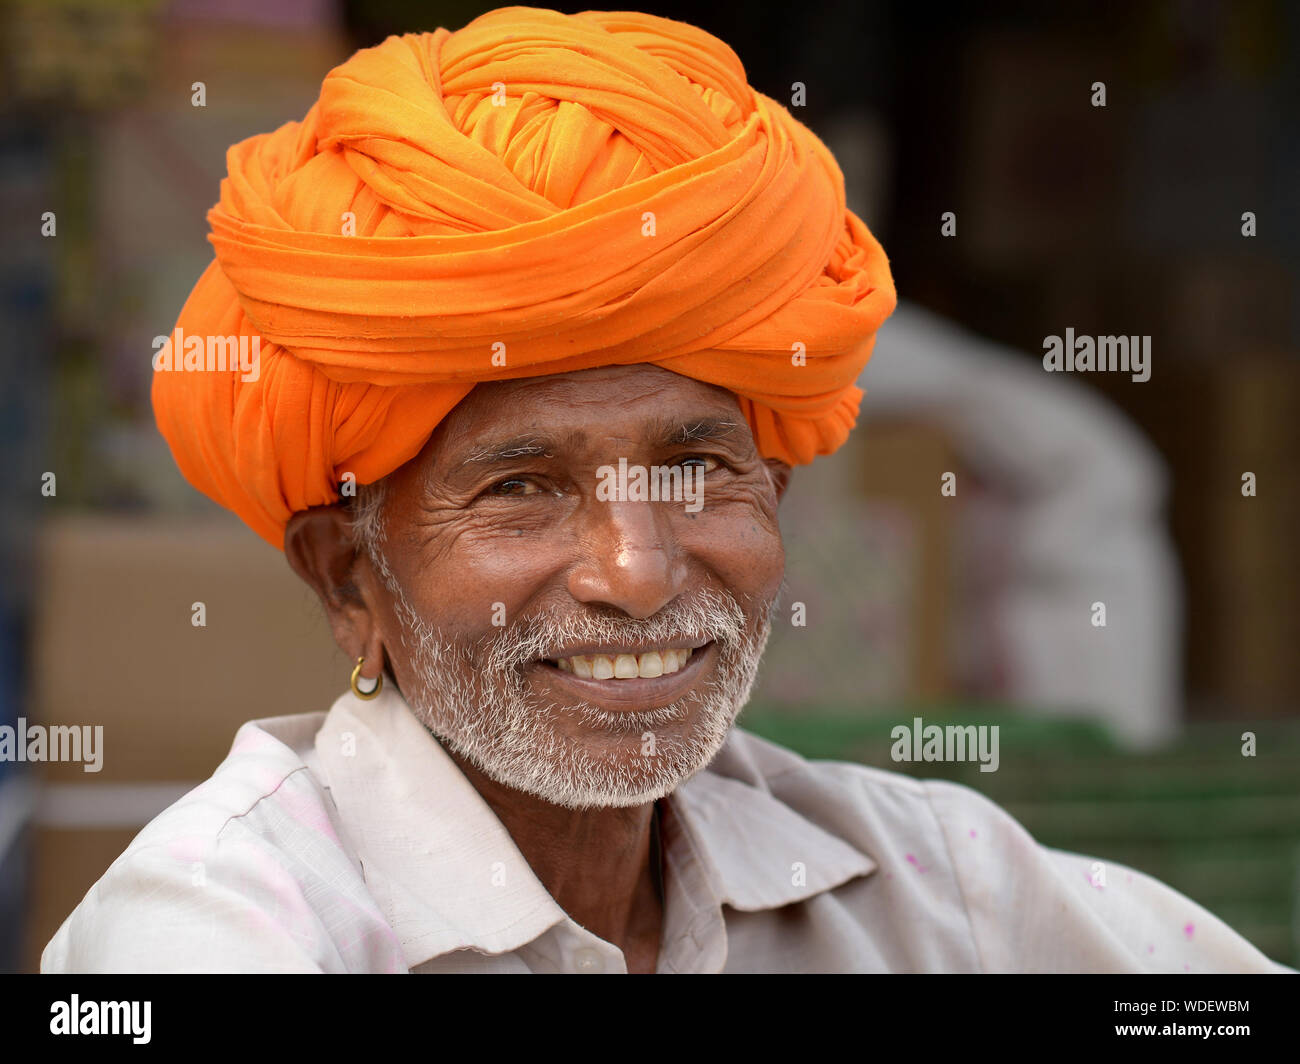 Indian Rajasthani man with orange turban smiles for the camera. Stock Photo